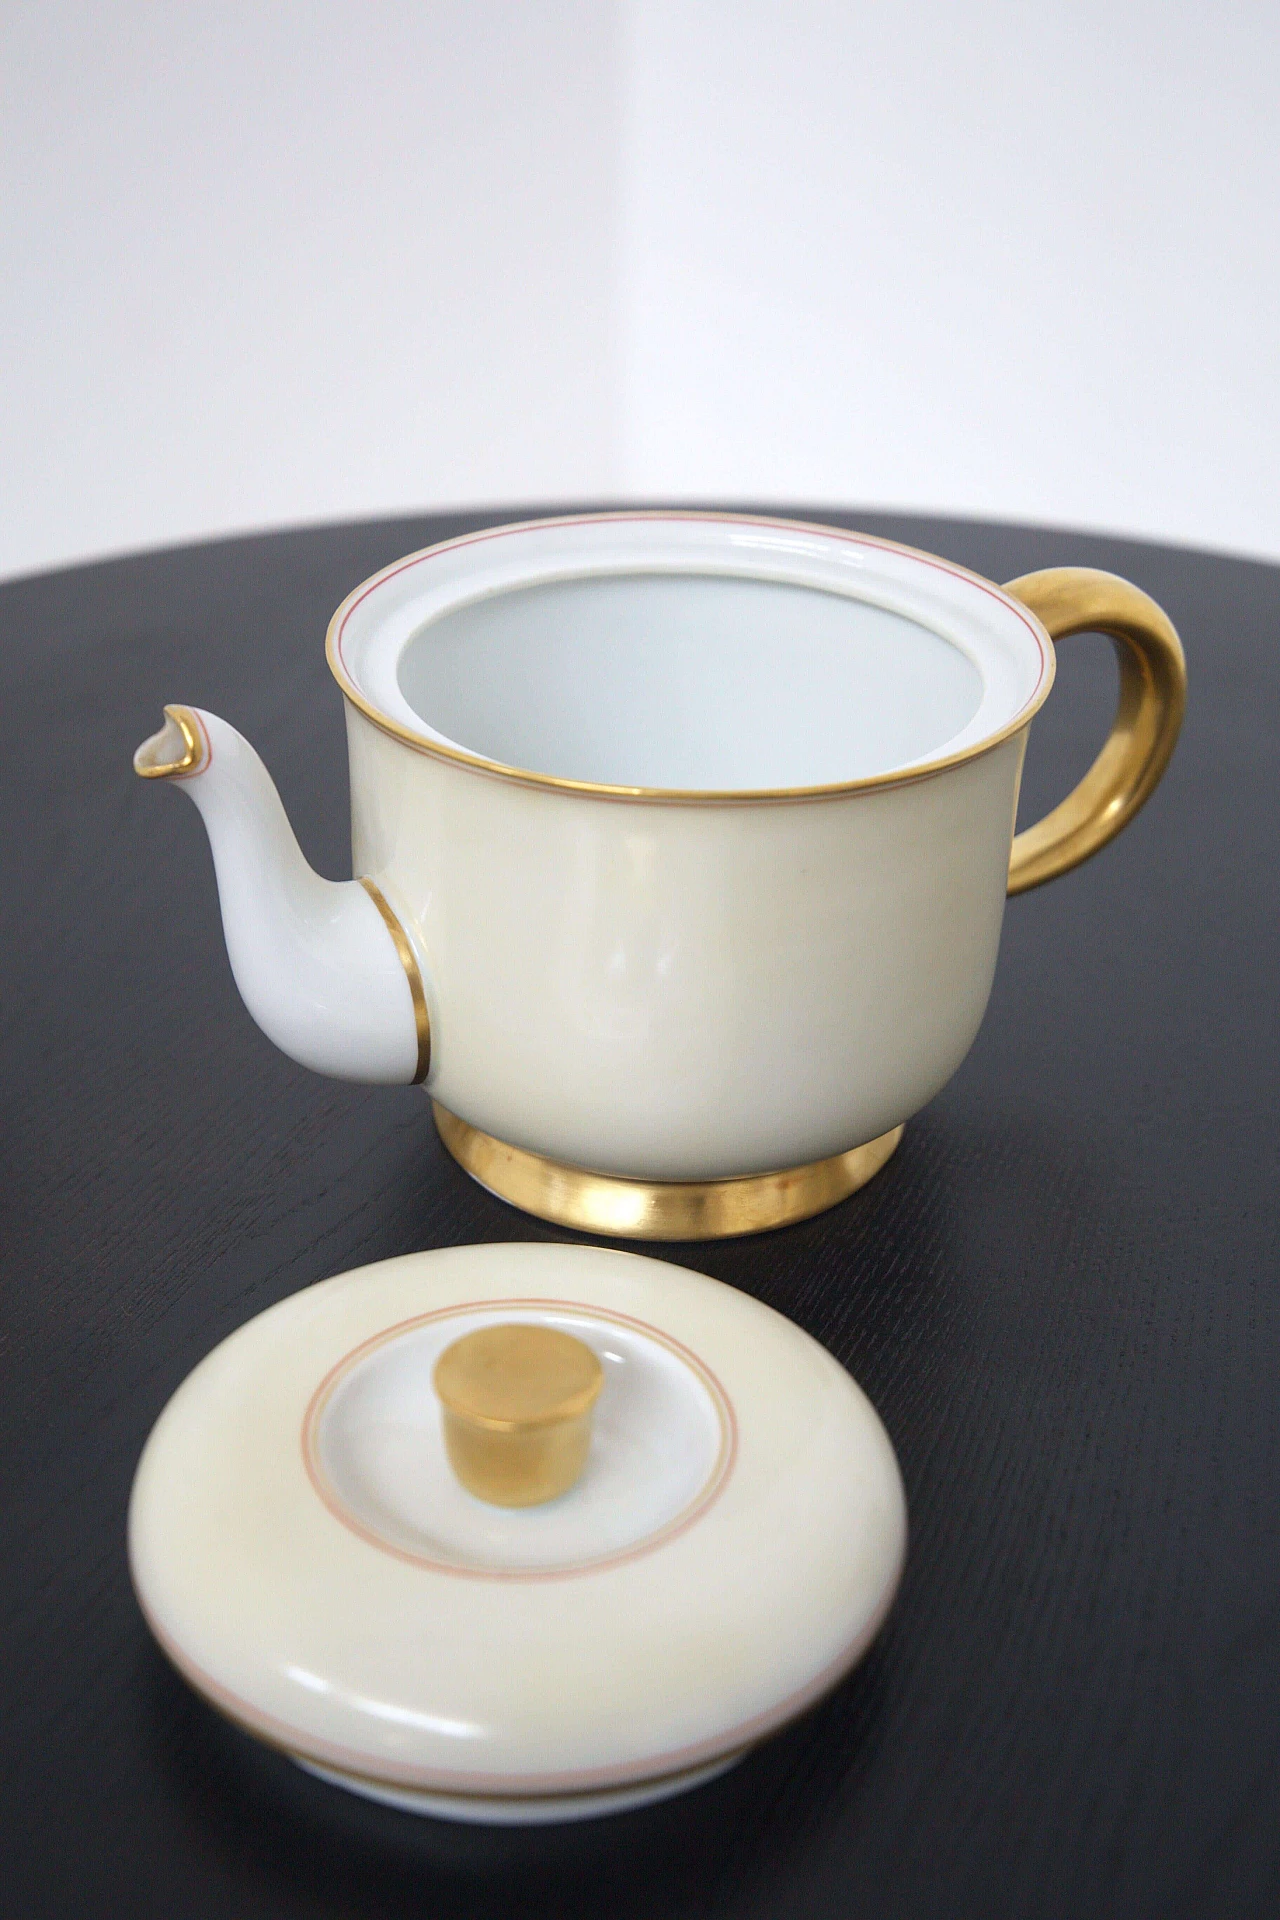 Ceramic and pure gold tea set by Gio Ponti for Ginori, 1930s 1477493